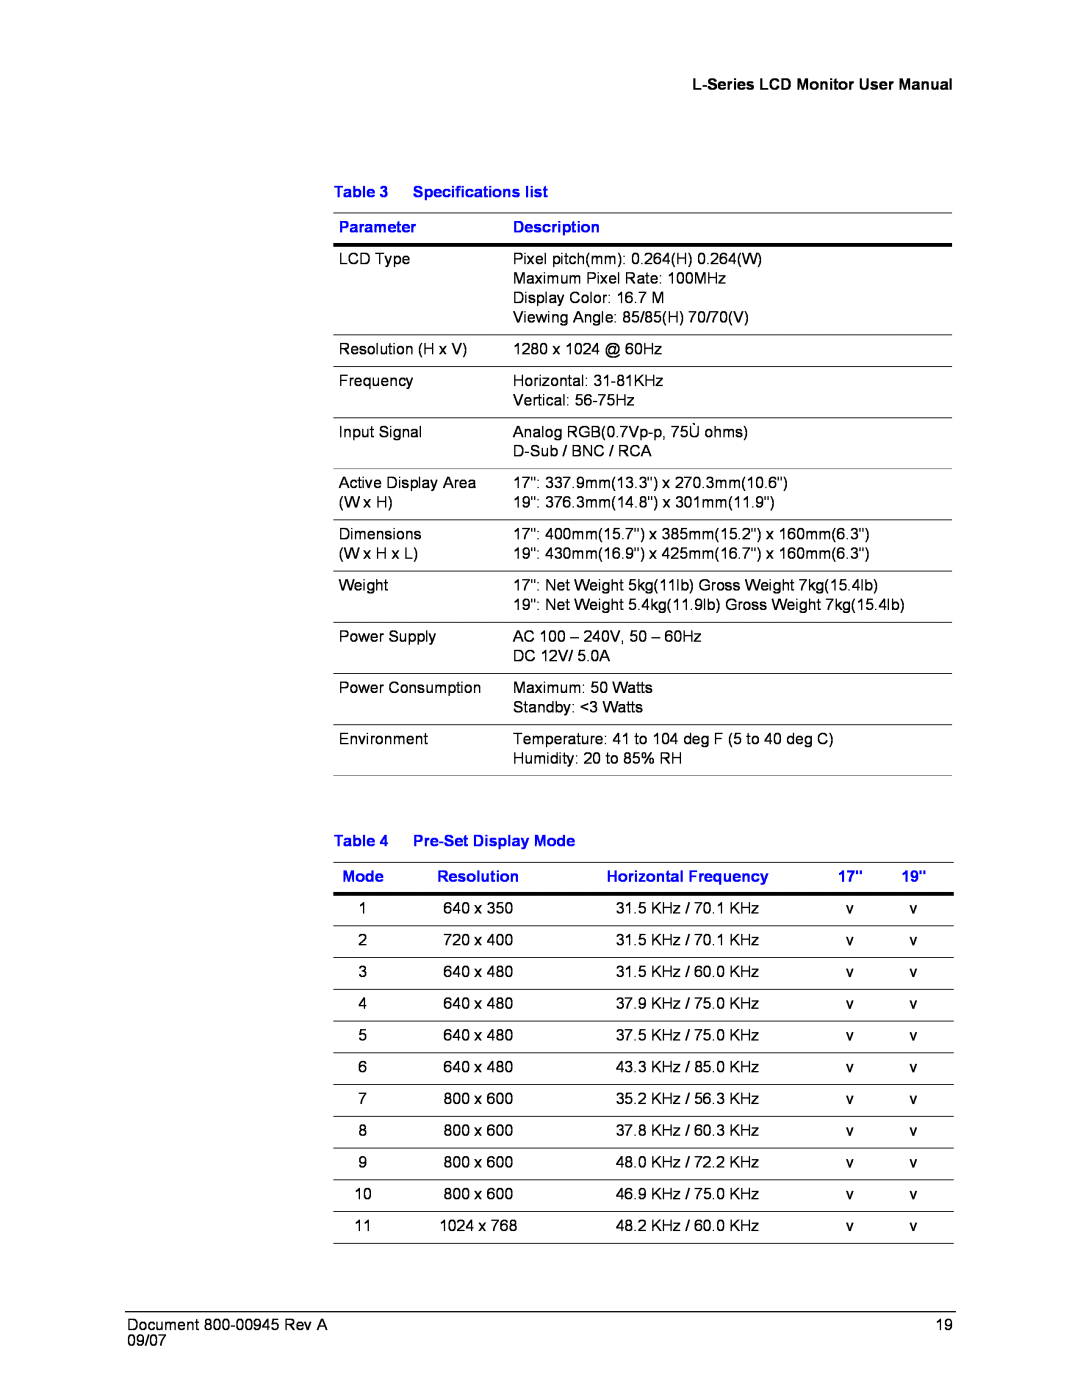 Honeywell HMLCD19L Specifications list, Parameter, Description, Pre-Set Display Mode, Resolution, Horizontal Frequency 